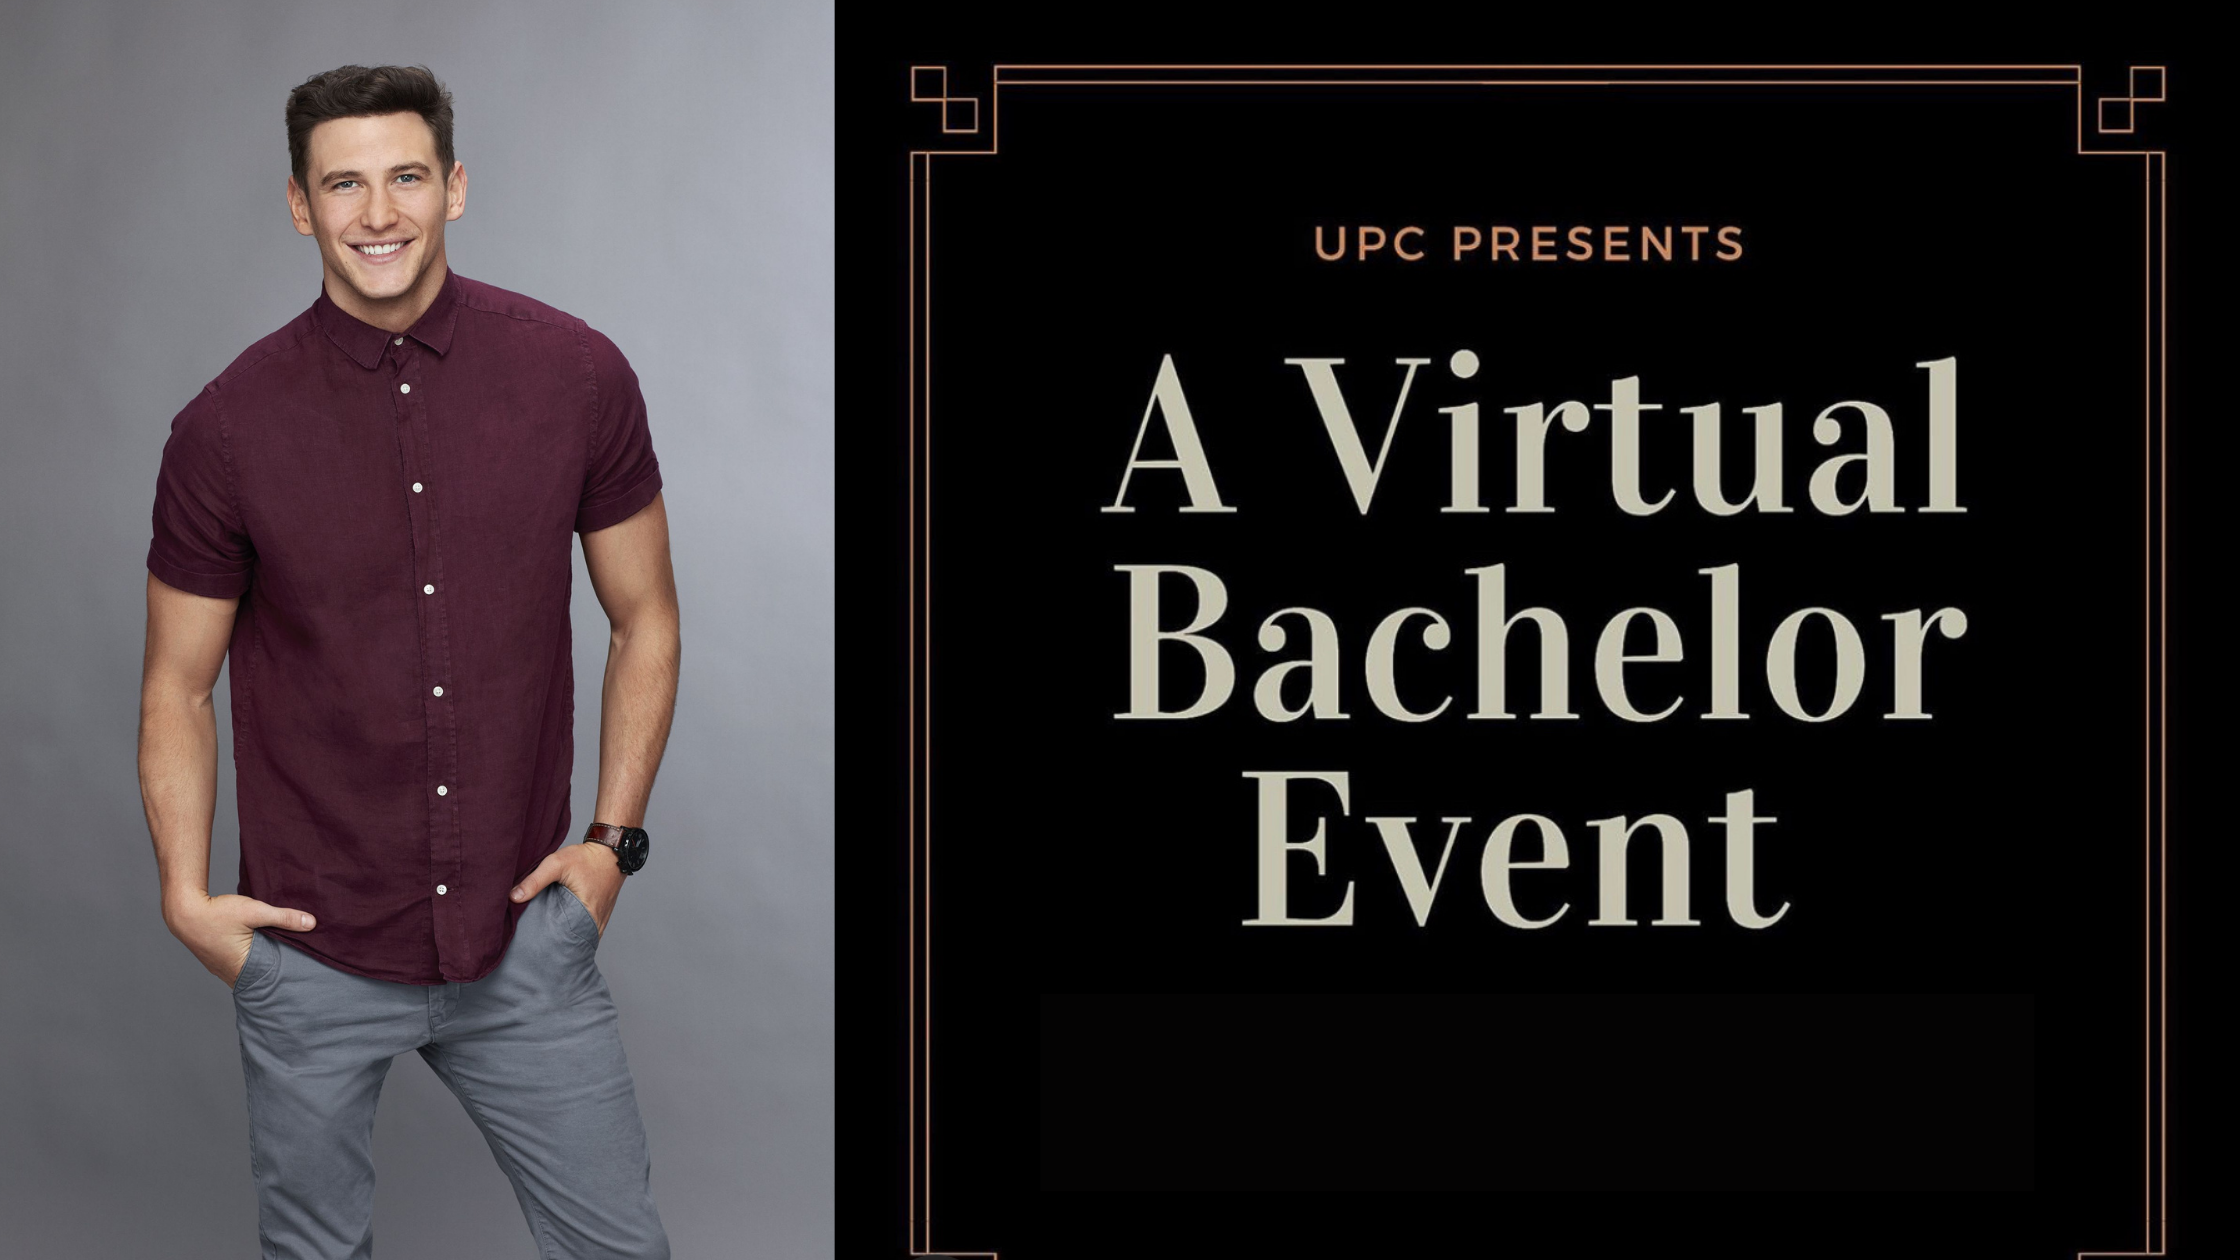 UPC Nebraska presents an exclusive virtual event with Blake Horstmann, former Bachelorette contestant on November 12, 2020 at 7:30 p.m. via Zoom.